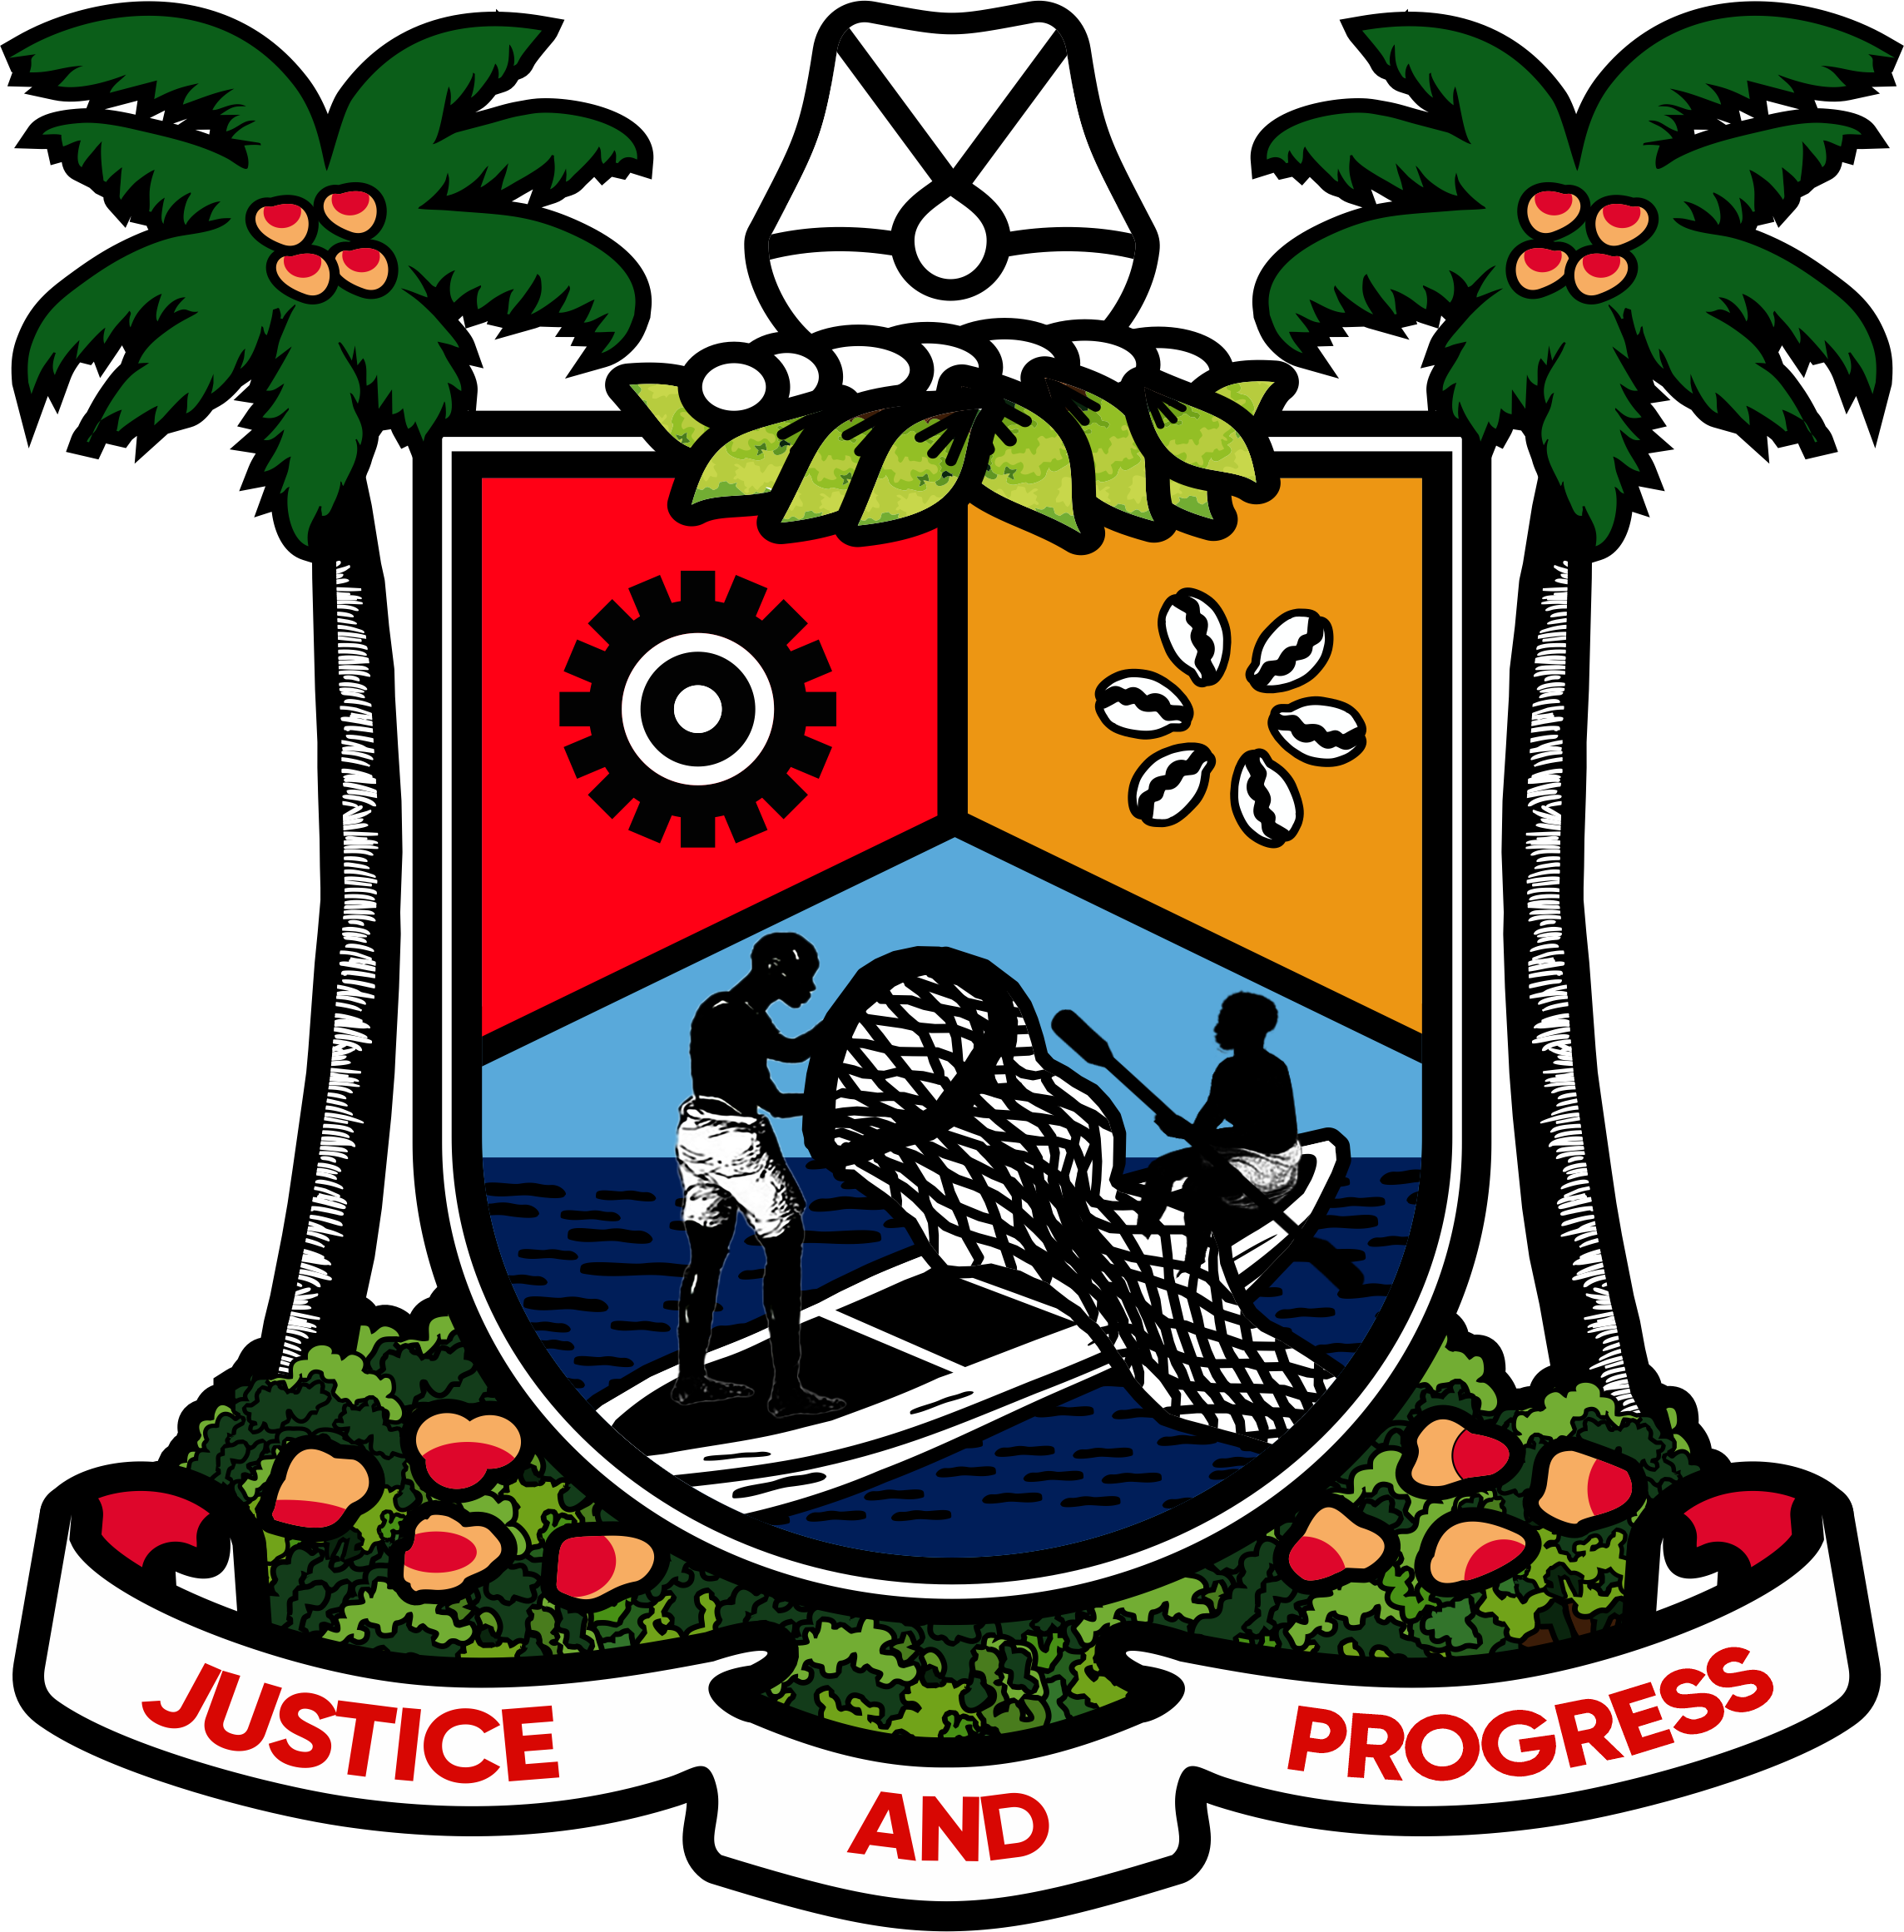 Lagos emblem